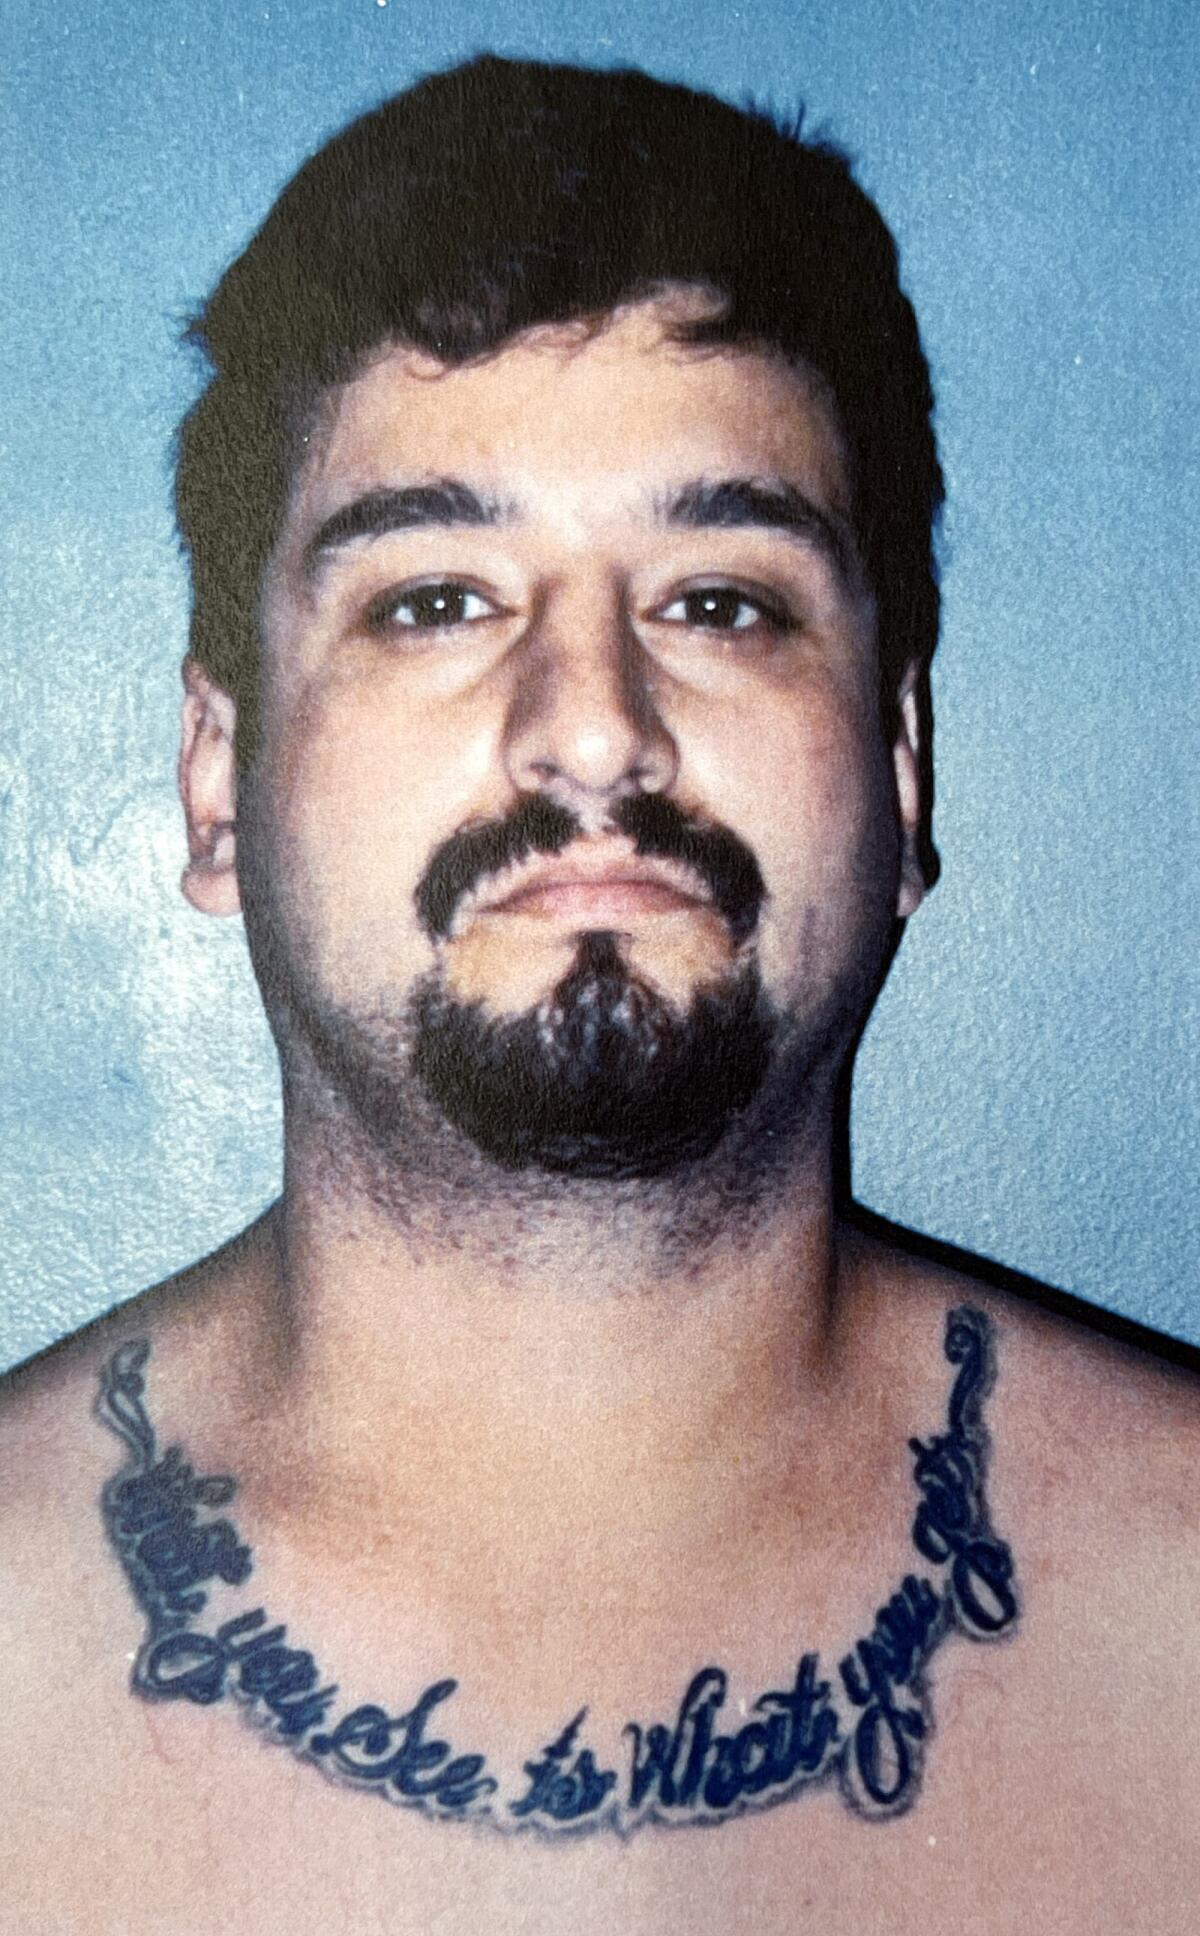 Oscar Torres was killed in 2008 after losing $610,000 in suspected drug money.